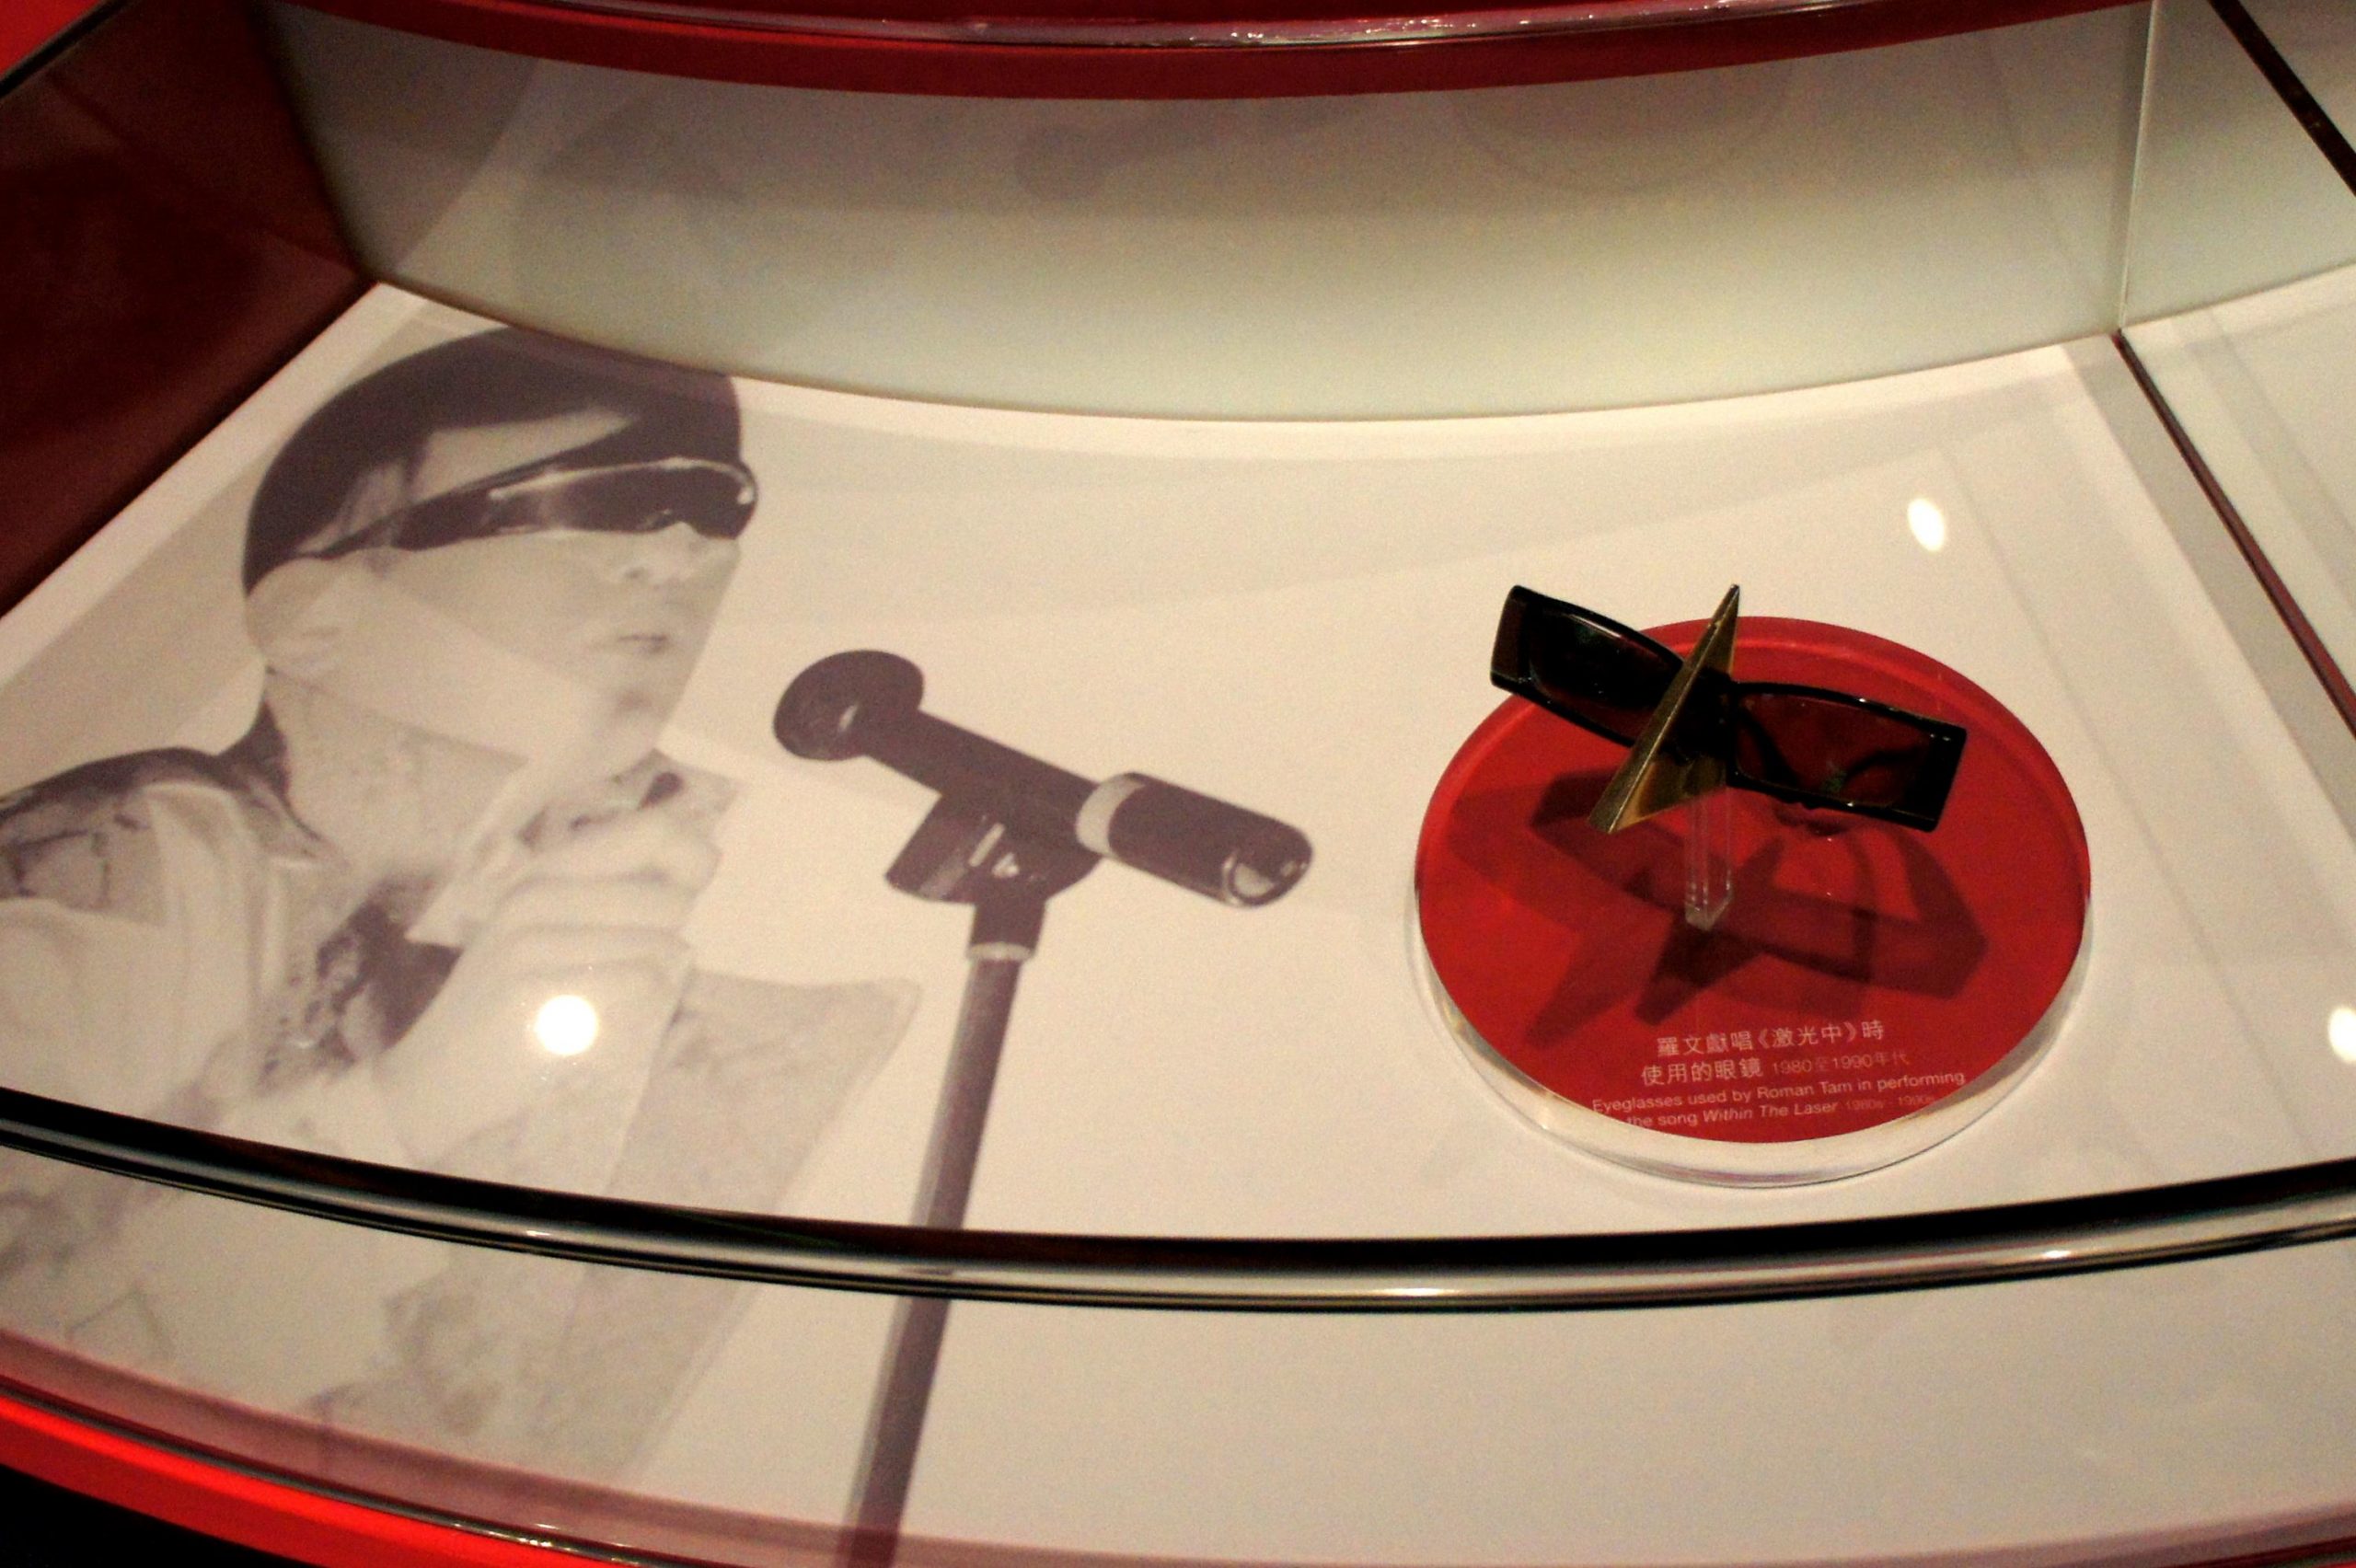 HKHM - Applauding to Hong Kong Pop Legend - Roman Tam eyeglasses (Hong Kong) - a red and white displ